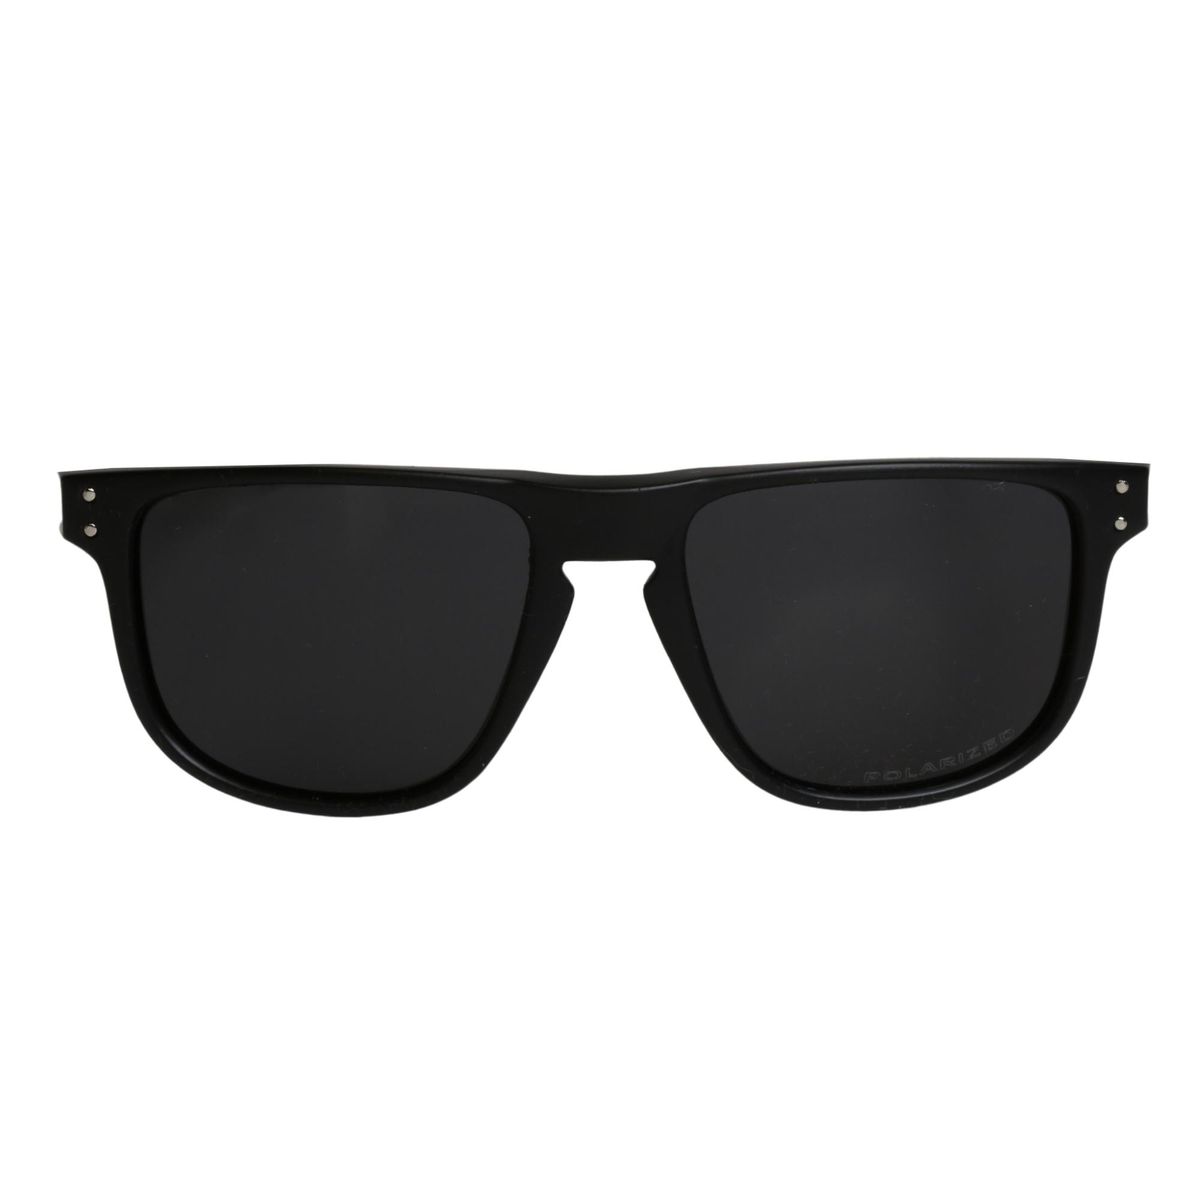 Superfine Sunglasses Draco Black | Shop Today. Get it Tomorrow ...